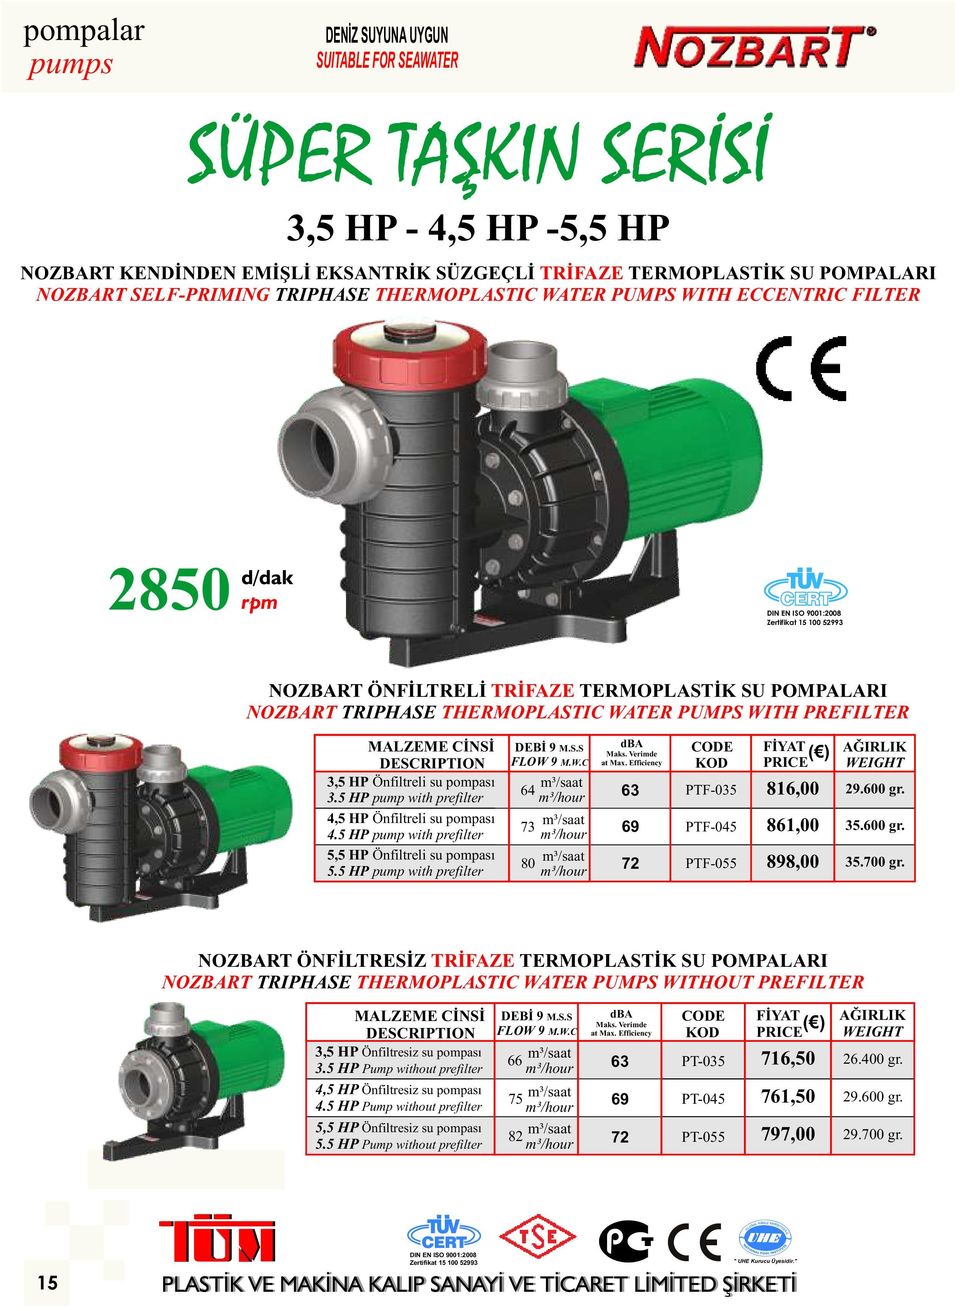 5 pump with prefilter 4,5 Önfiltreli su pompası 4.5 pump with prefilter 5,5 Önfiltreli su pompası (T) 5.5 pump with prefilter DEBİ 9 M.S.S FLOW 